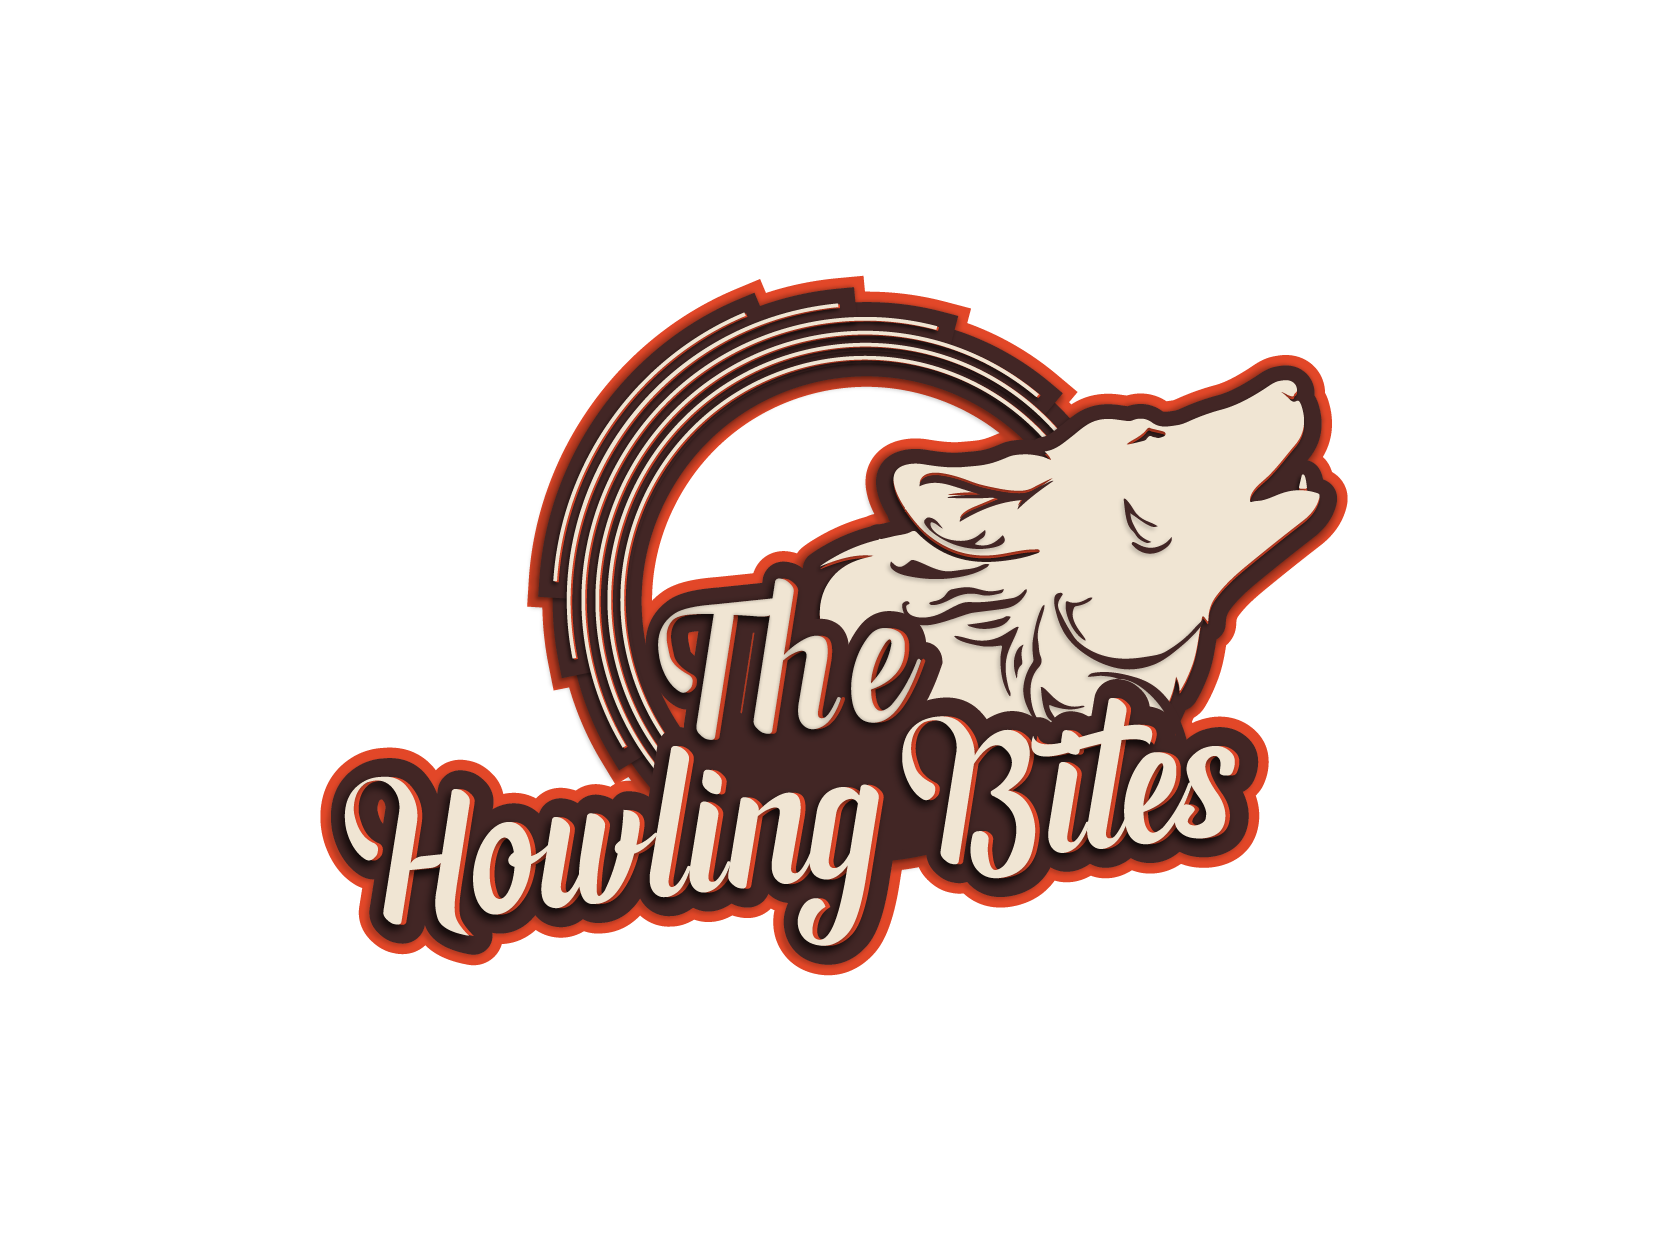  The Howling Bites Logo Design